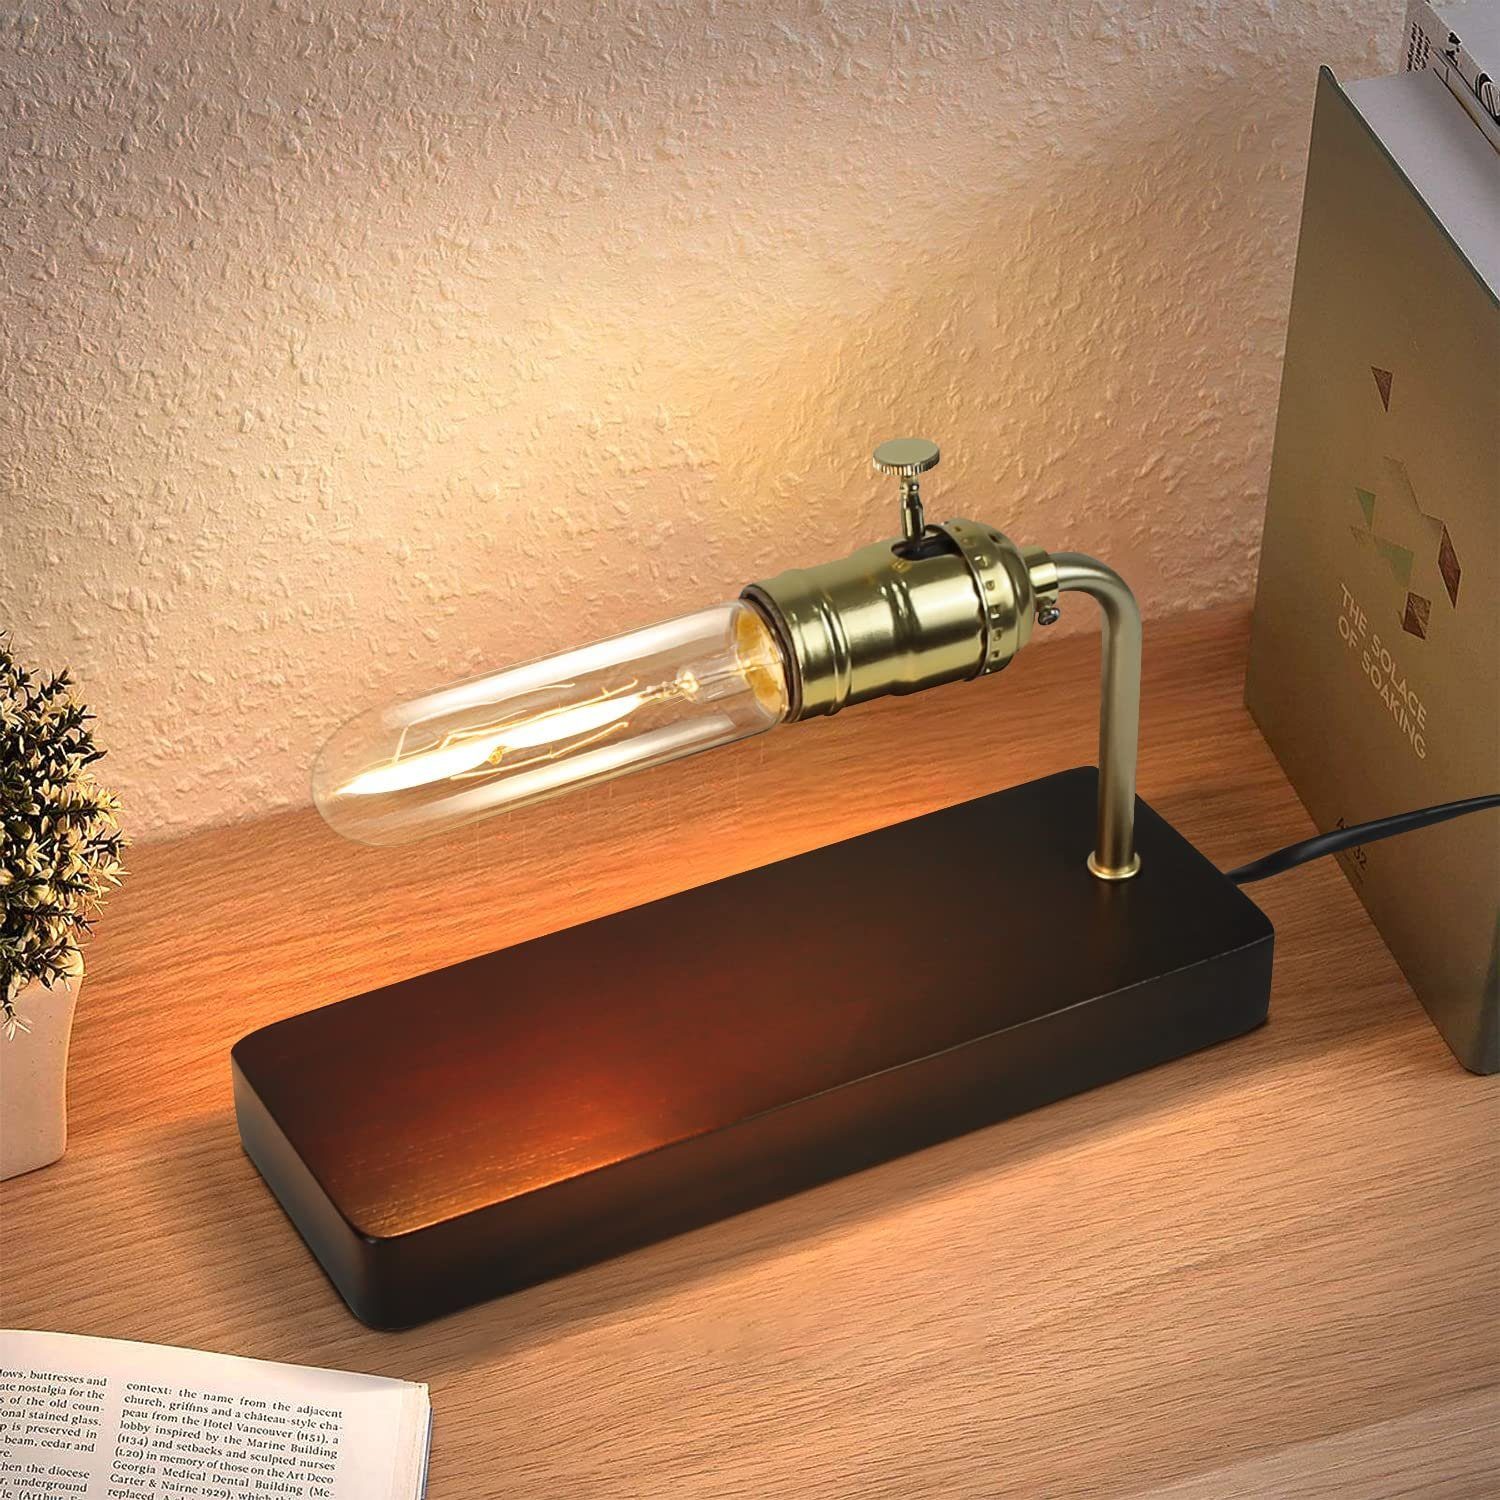 antik Holz aus Metall Nettlife E27 wechselbar Nachttischlampe Schalter, Industrie LED Steampunk mit